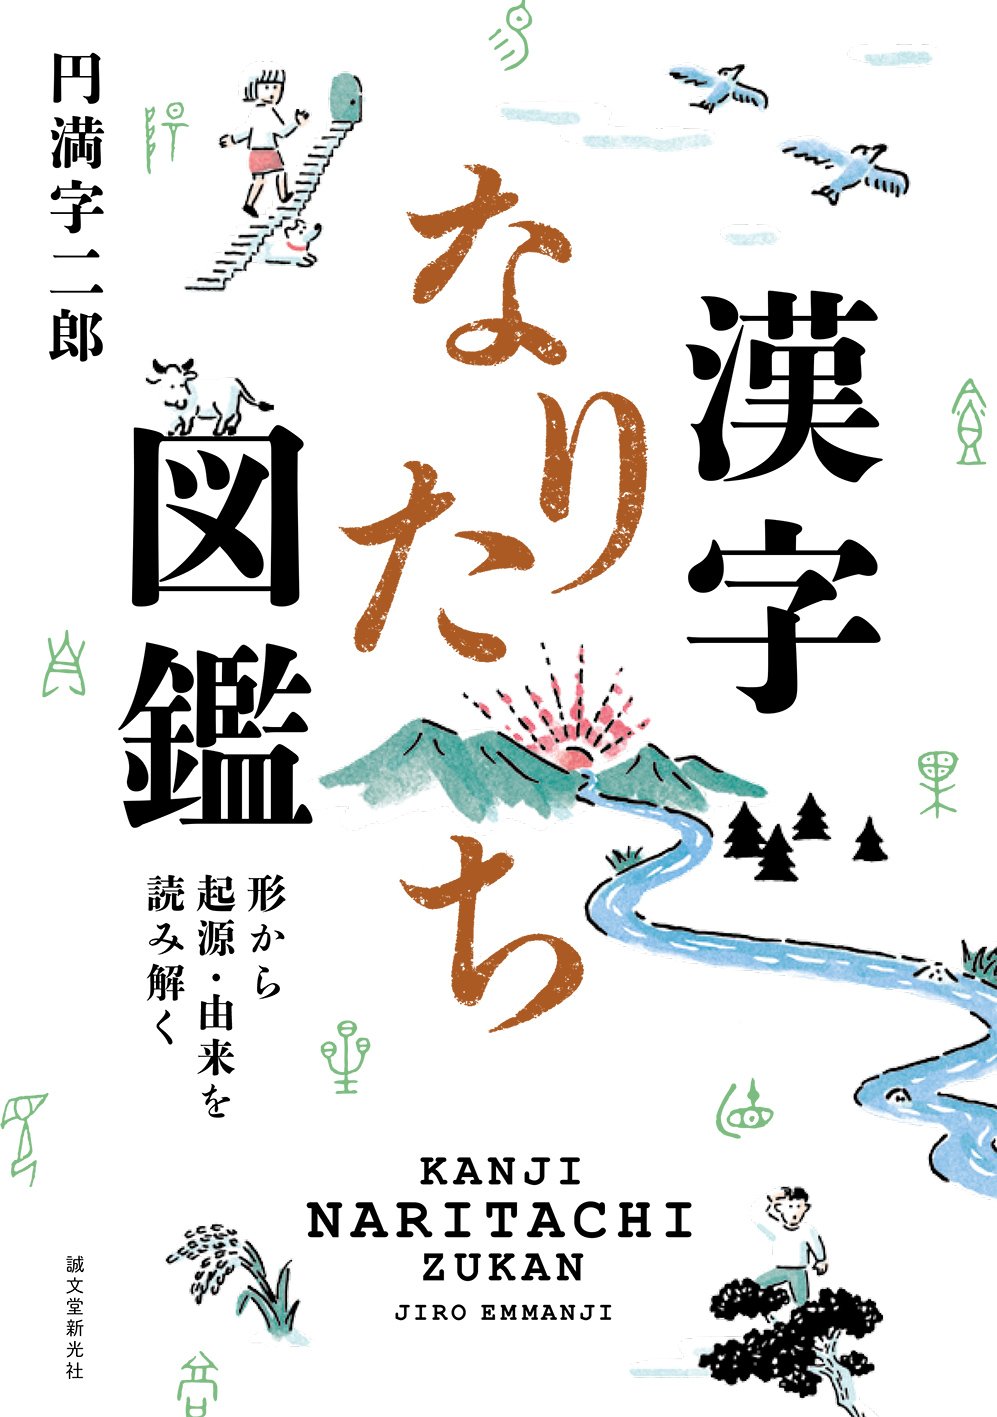 Kanji Naritachi Encyclopedia